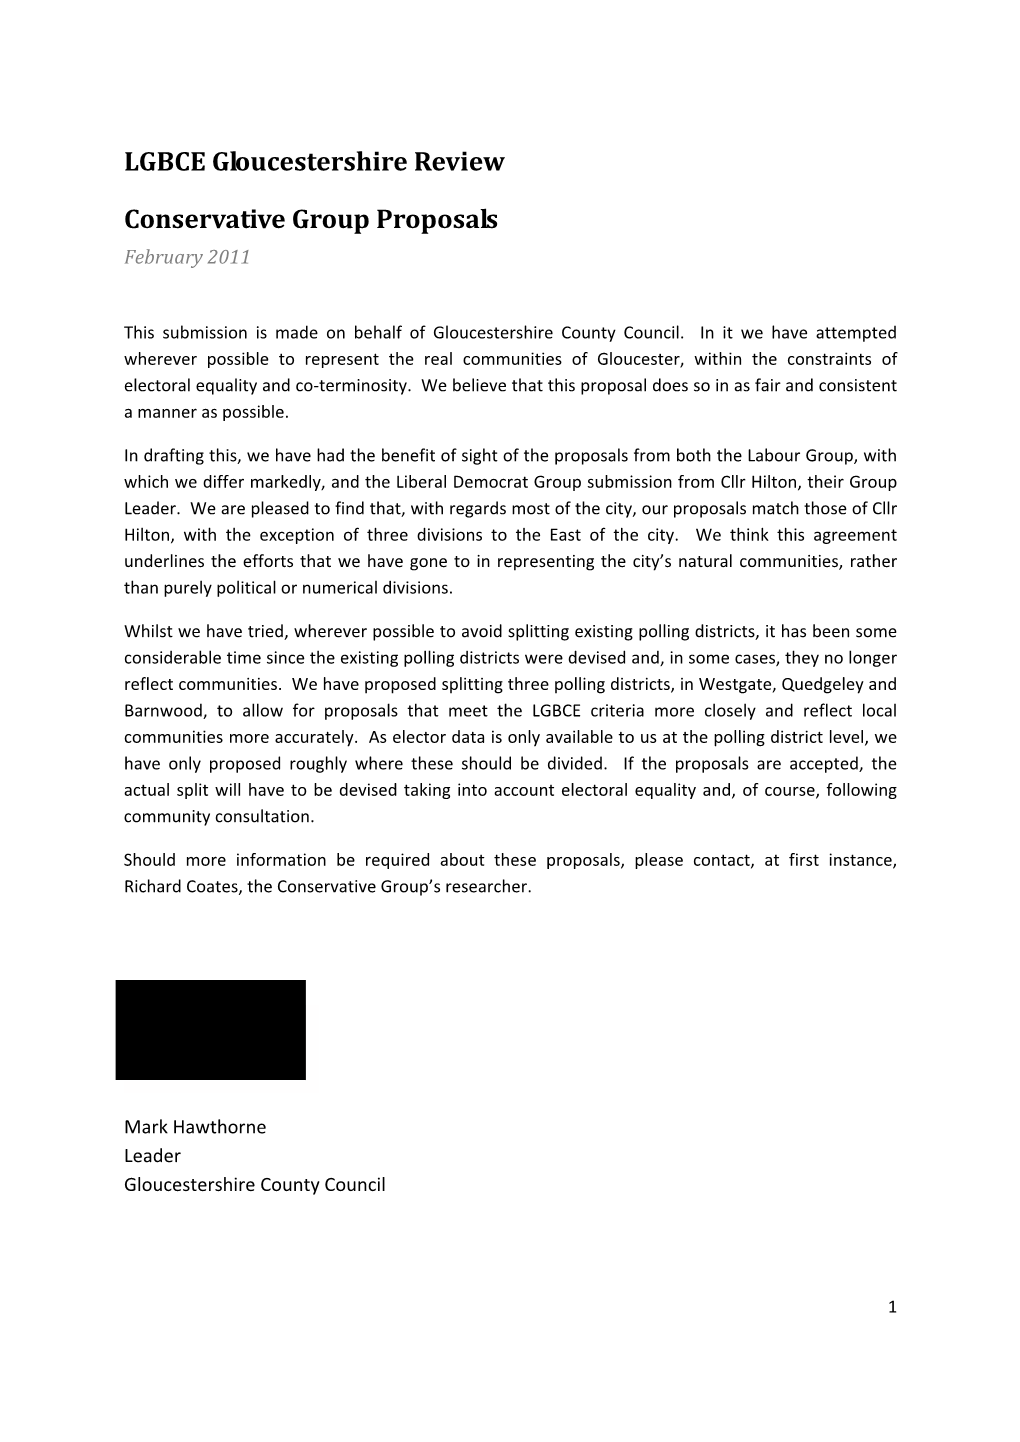 LGBCE Gloucestershire Review Conservative Group Proposals